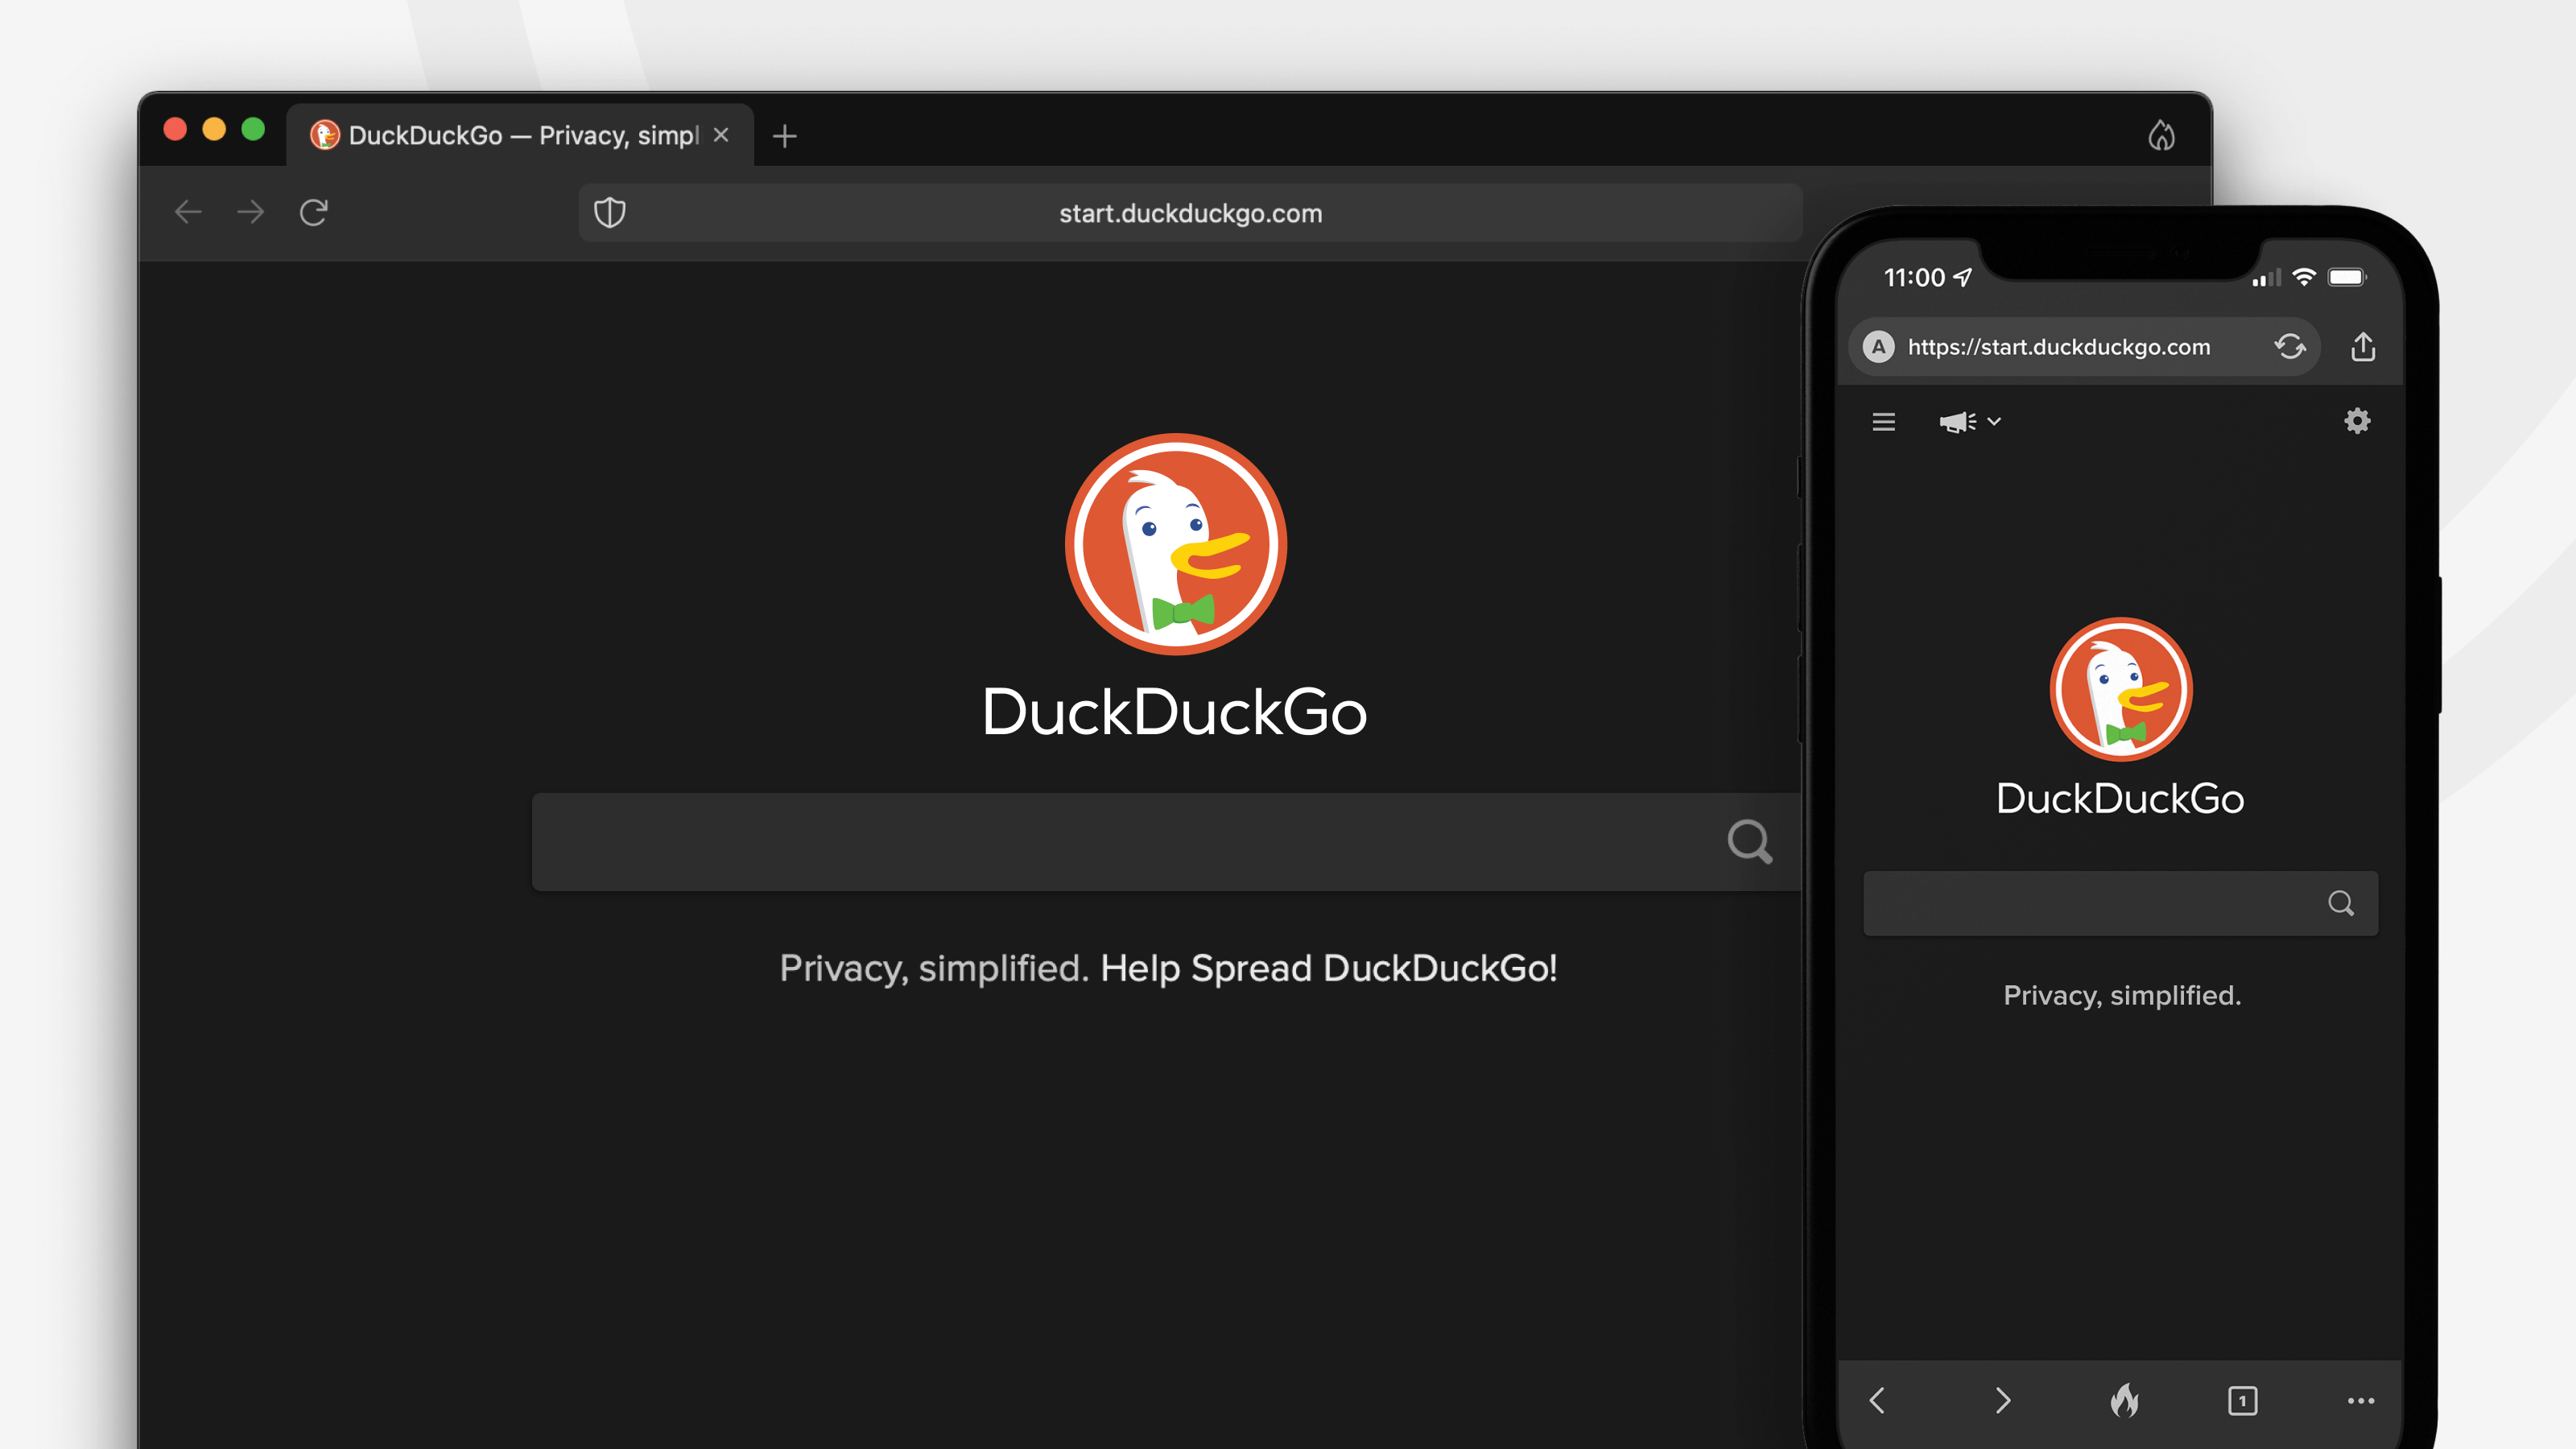 DuckDuckGo in 2021: Building the Privacy Super App